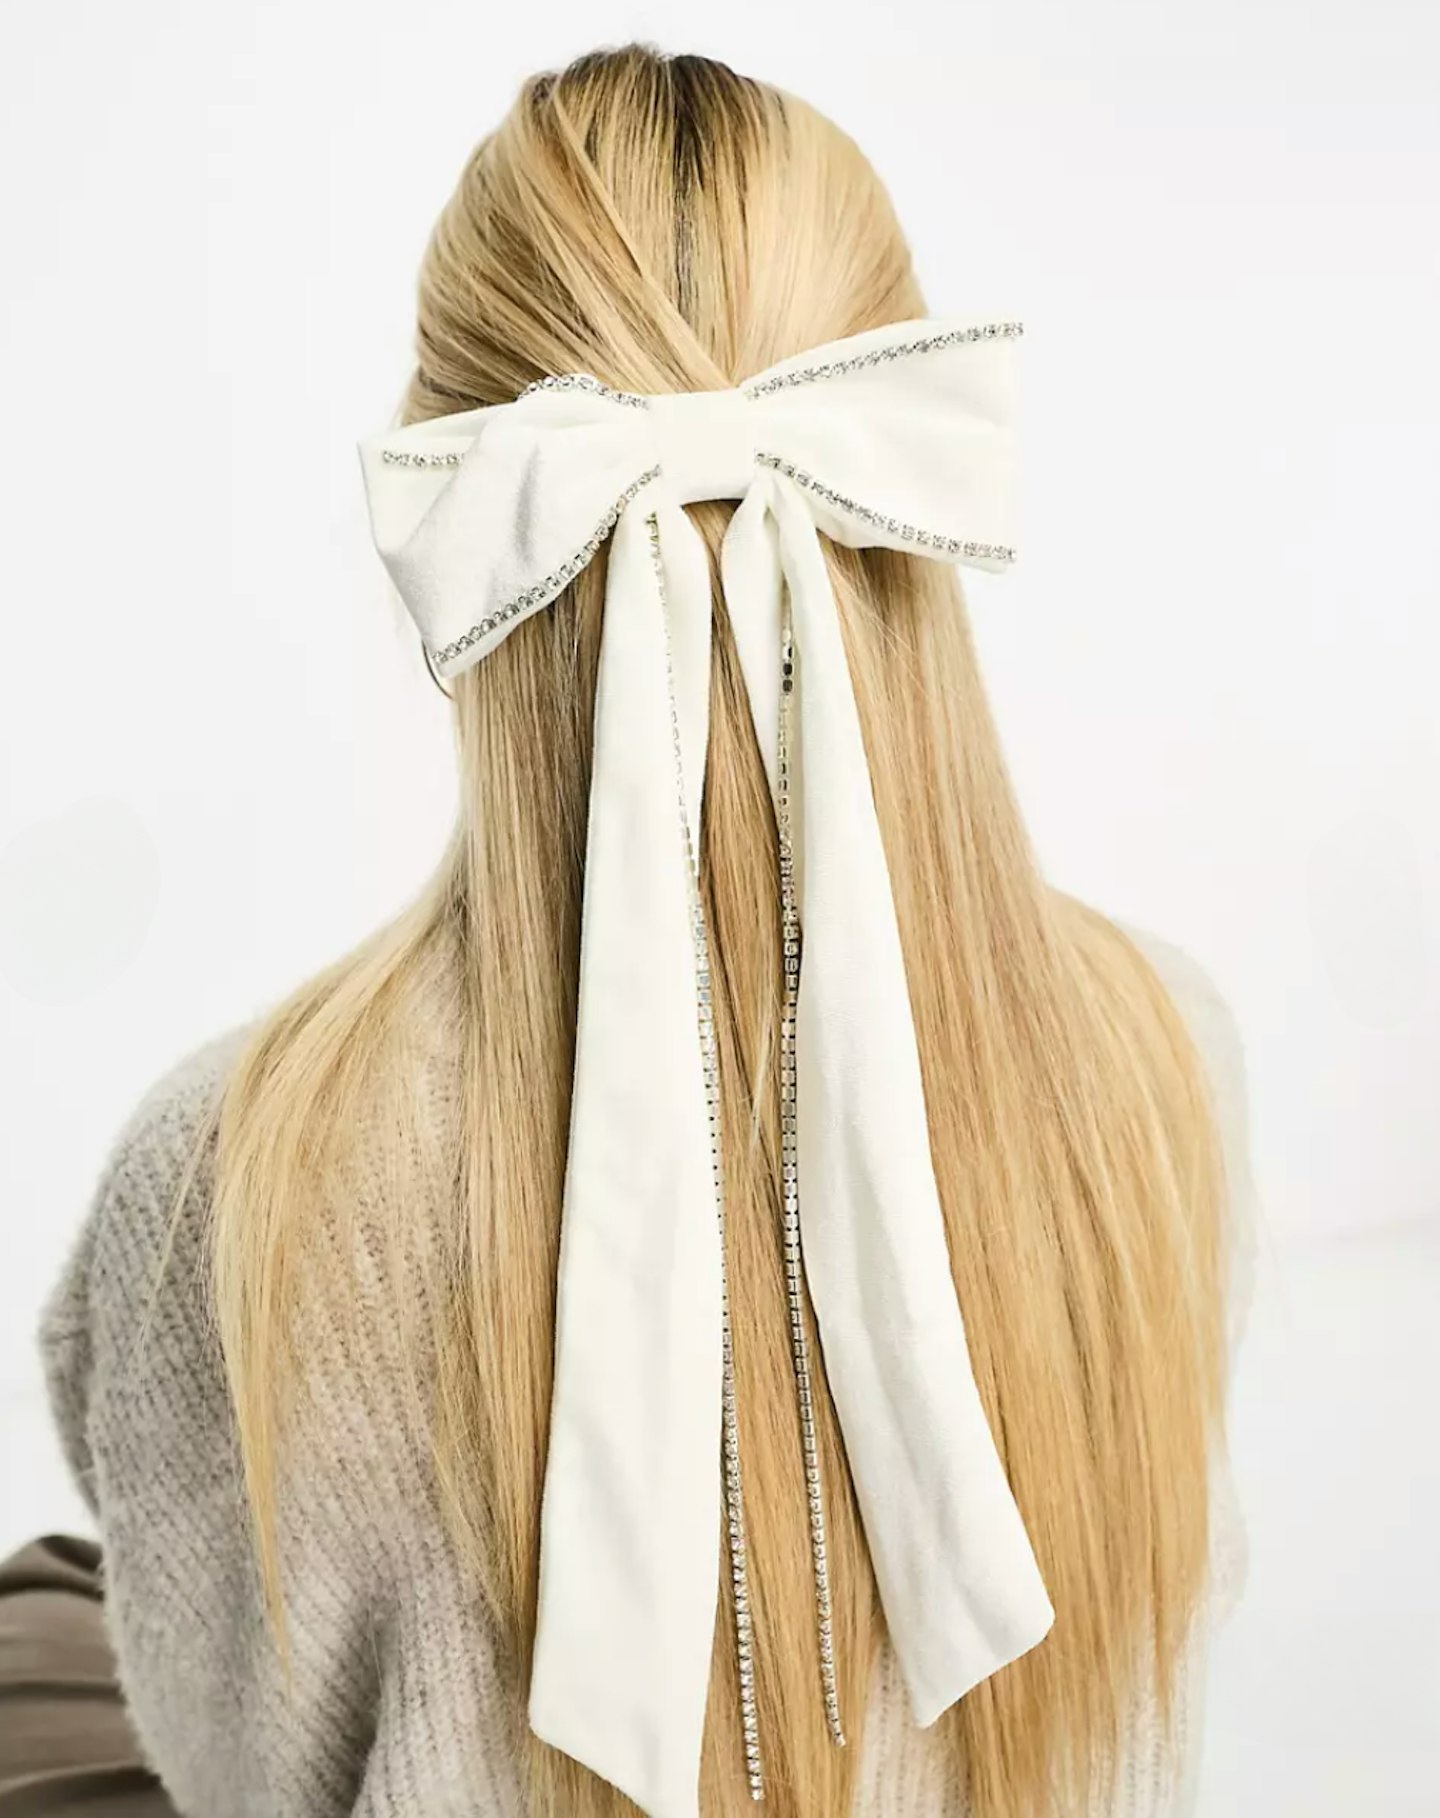 My Accessories London long velvet rhinestone bow hair clip in white